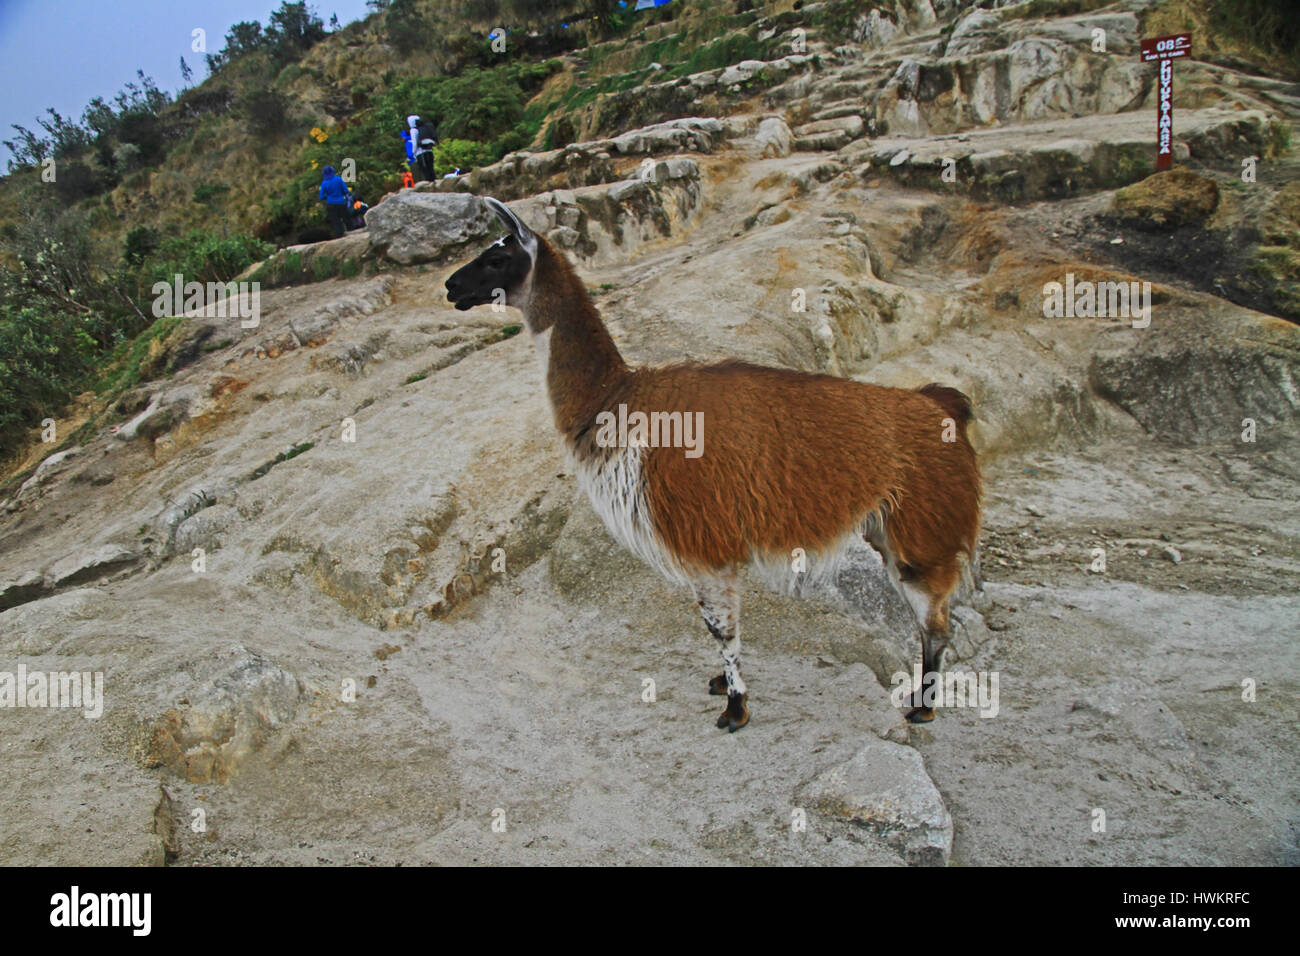 Llama on the Inca Trail in Peru Stock Photo